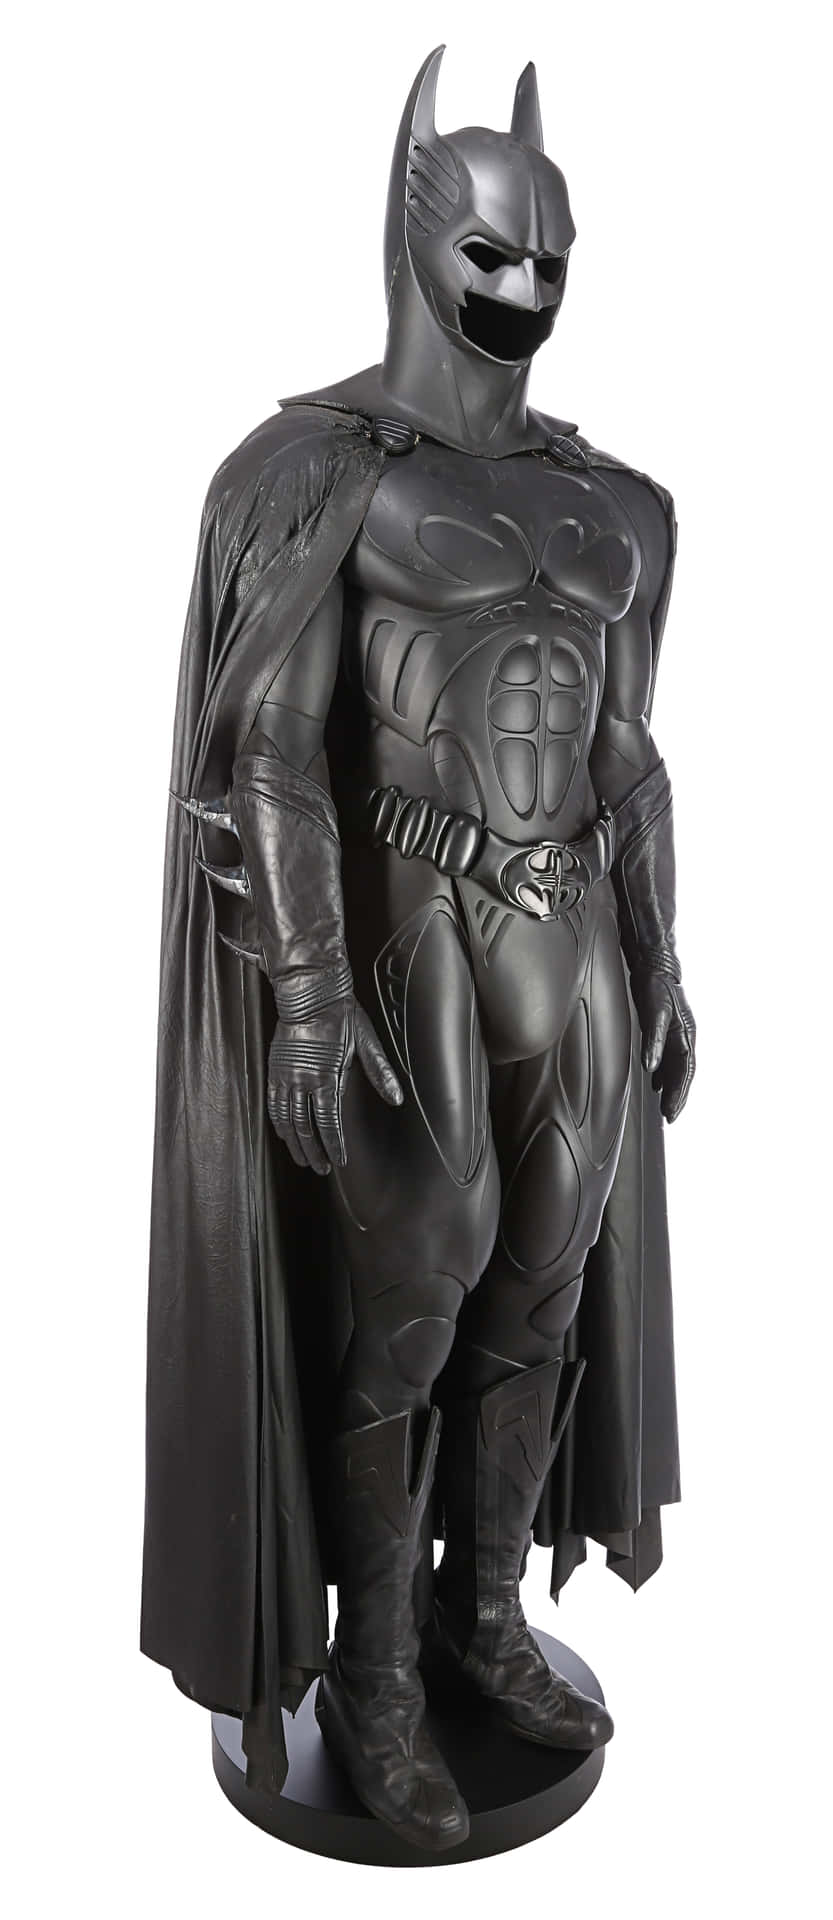 The Dark Knight Rises: Featuring Batman's Advanced Bat-Suit Wallpaper